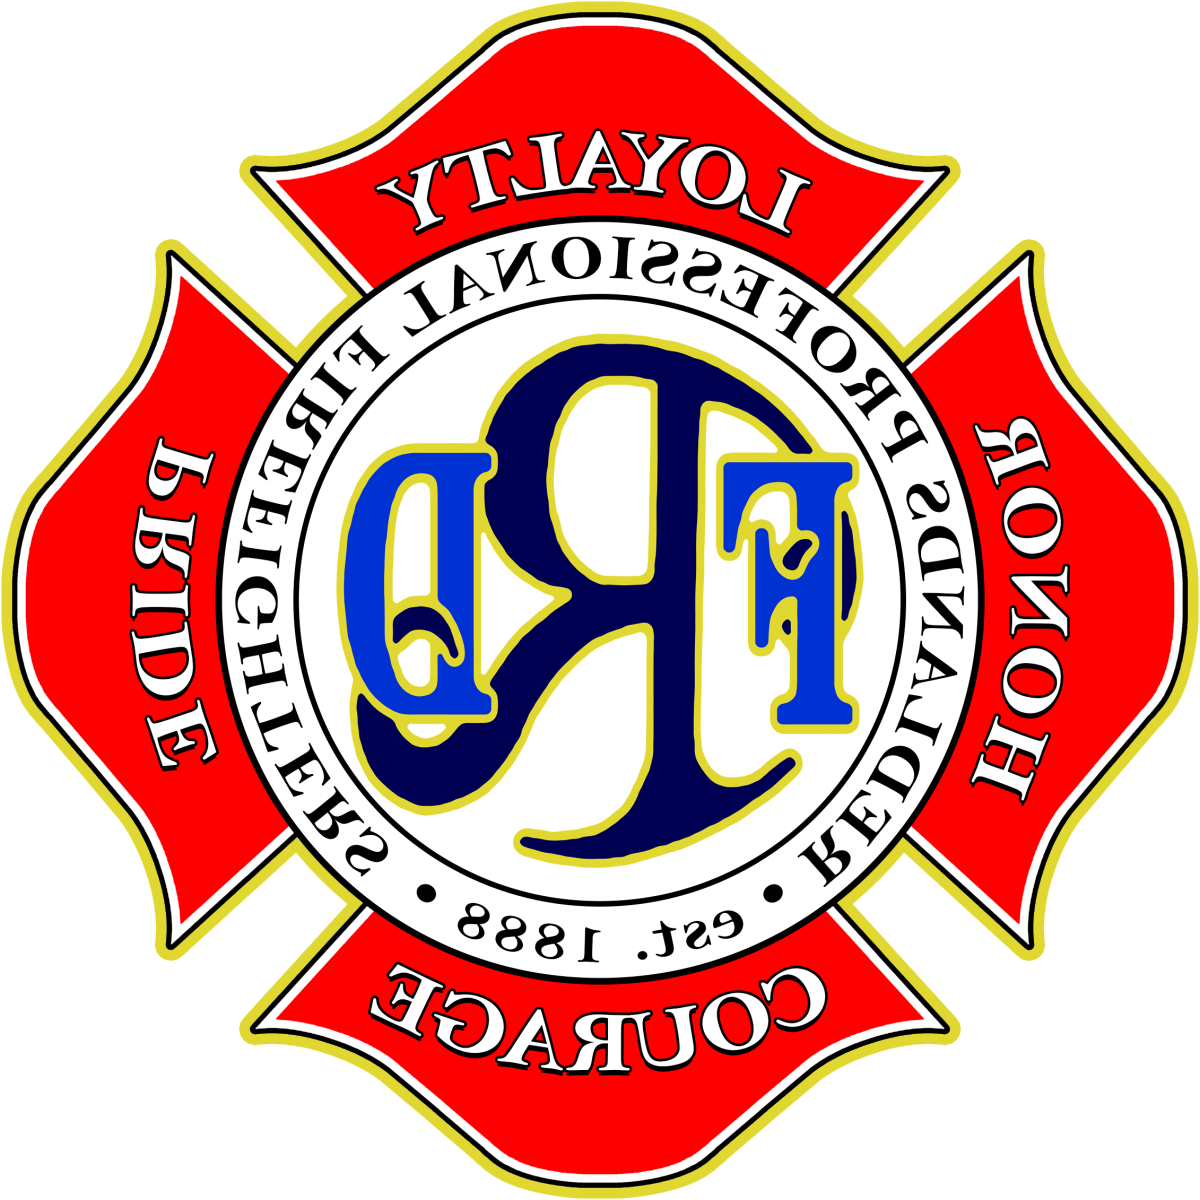 Redlands Professional Firefighters